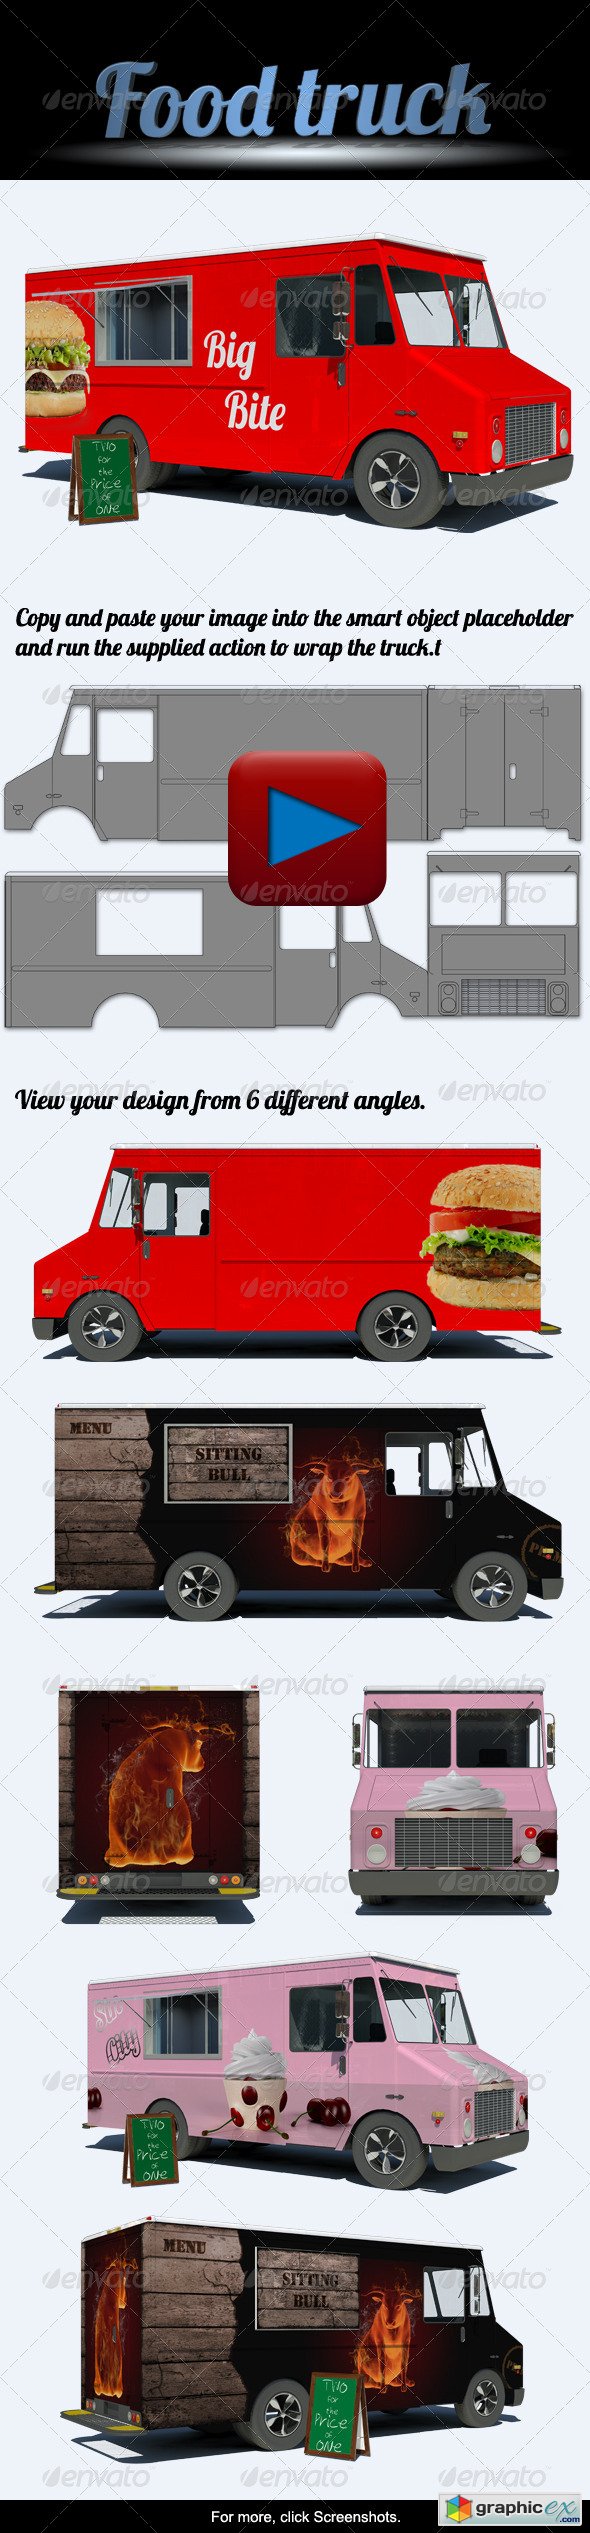 Food Truck Mock-Up